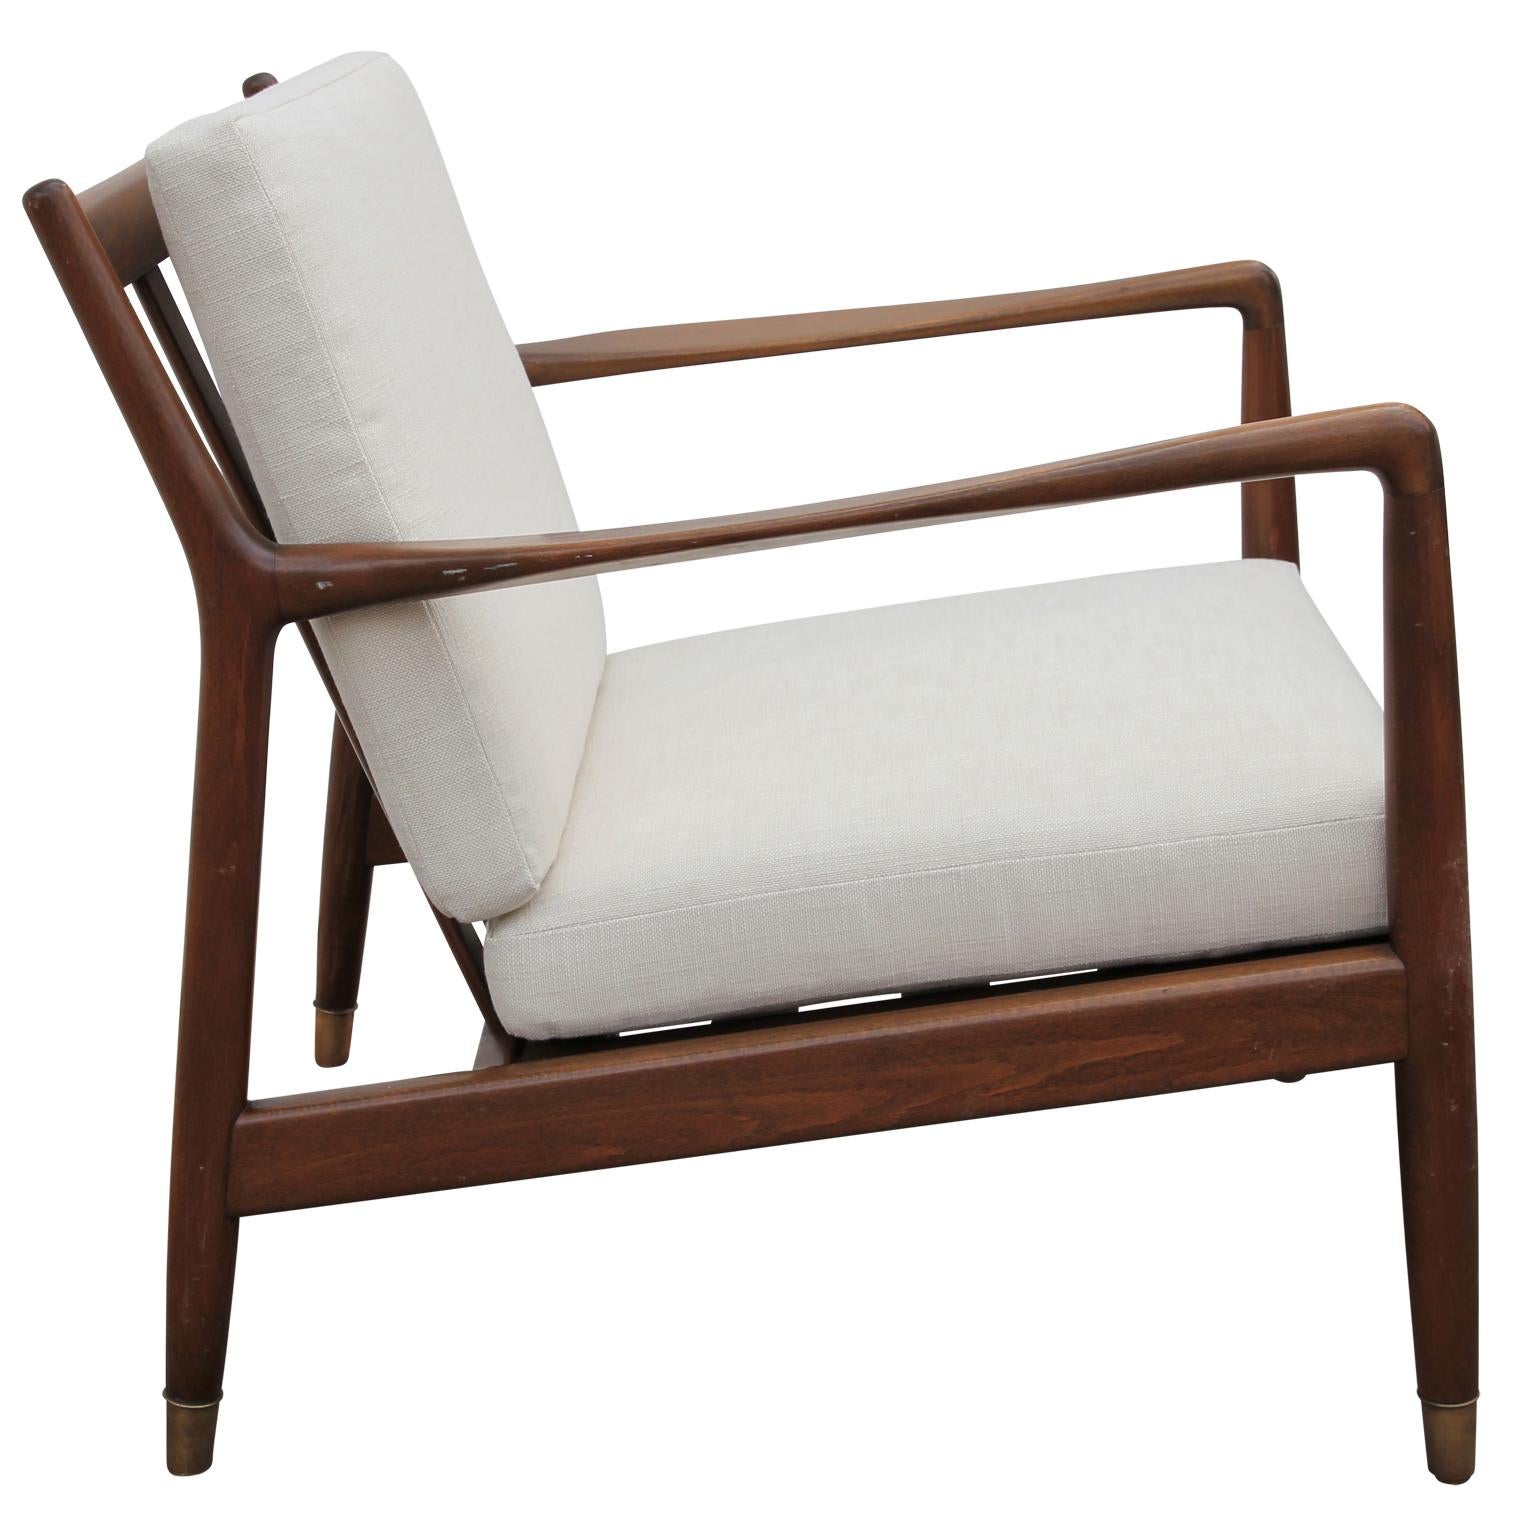 Birch Folke Ohlsson Model 75-C Walnut Color Danish Modern Lounge Chair for DUX